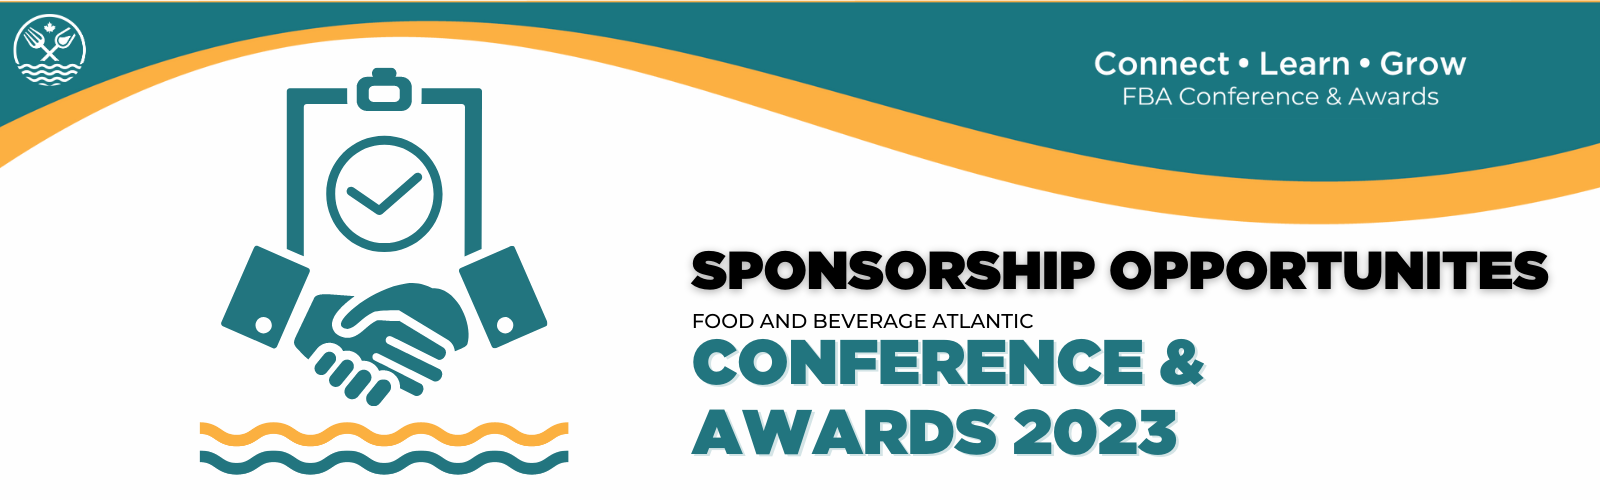 FBA Conference & Awards 2023 Food & Beverage Atlantic